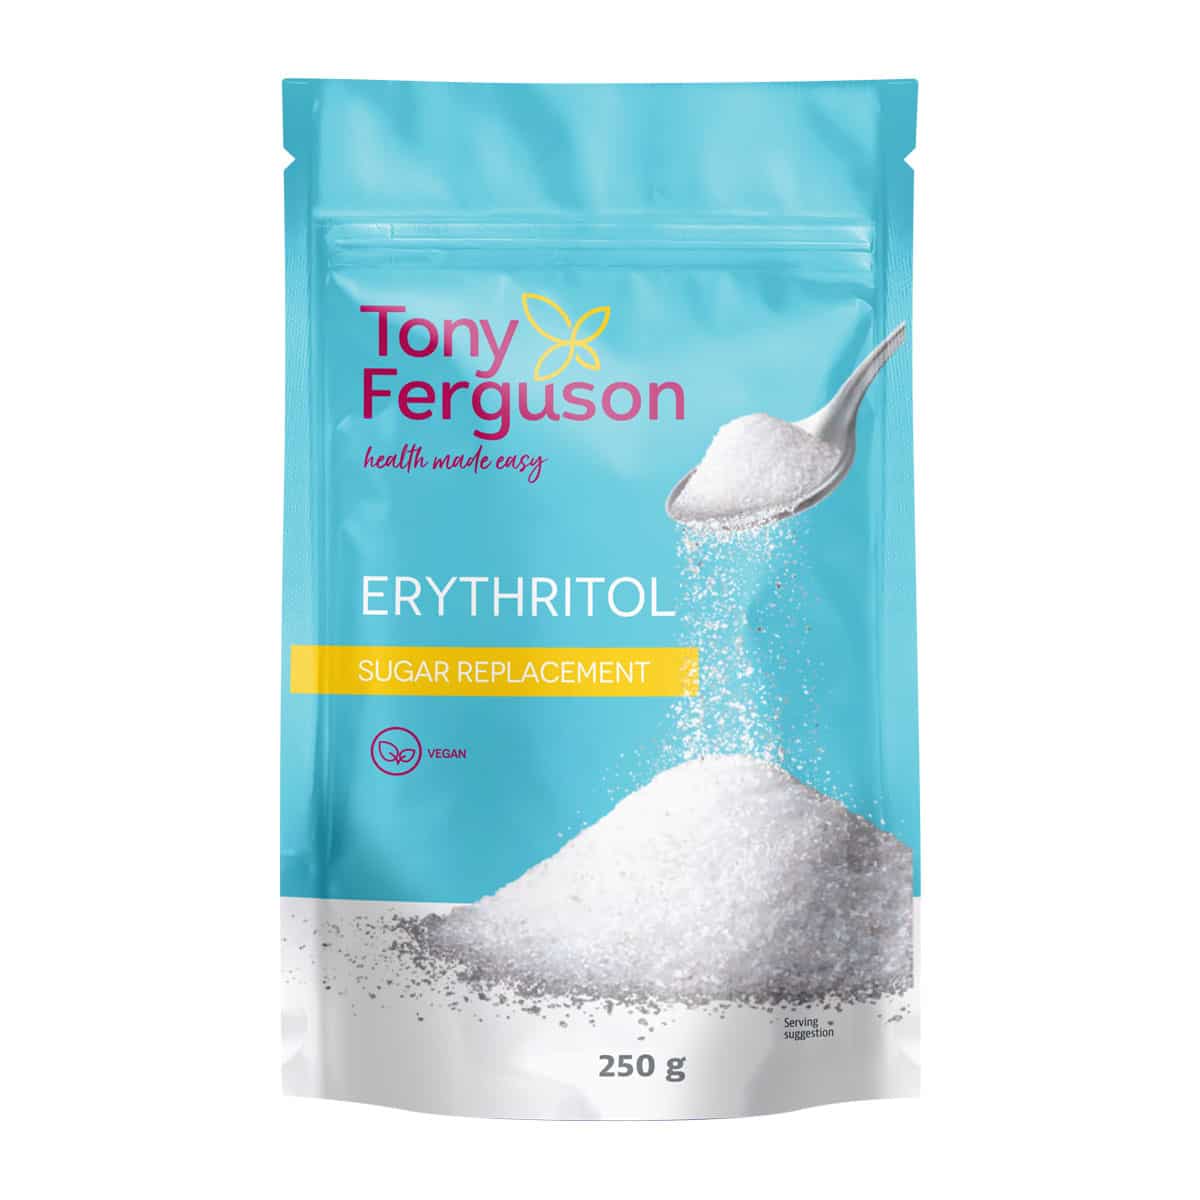 Tony Ferguson Erythritol Sugar Replacement - 250g